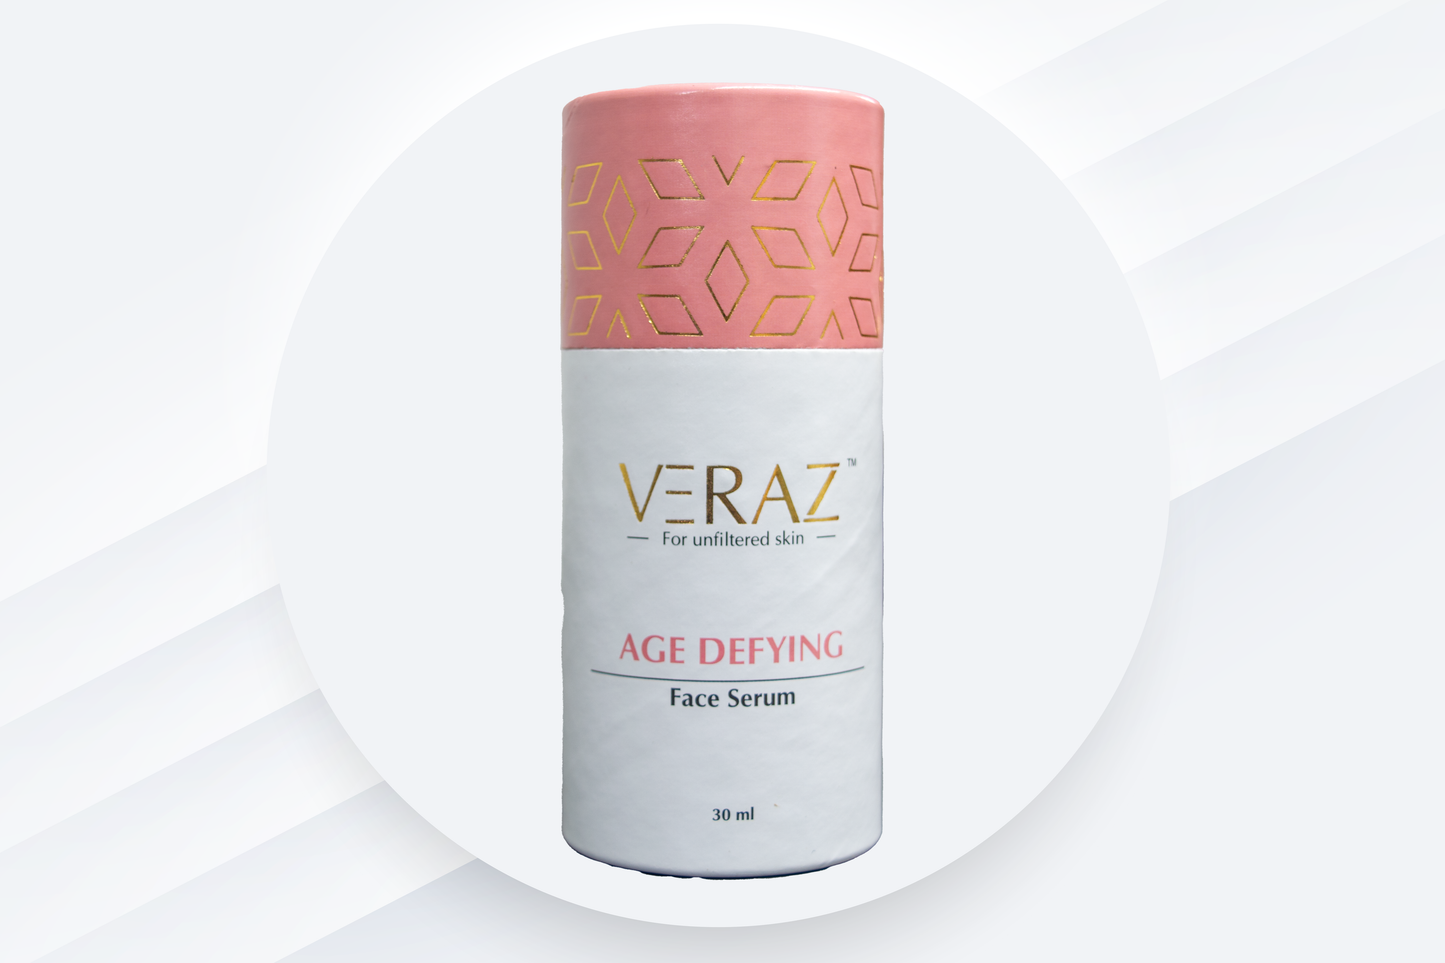 Veraz Age-defying face serum